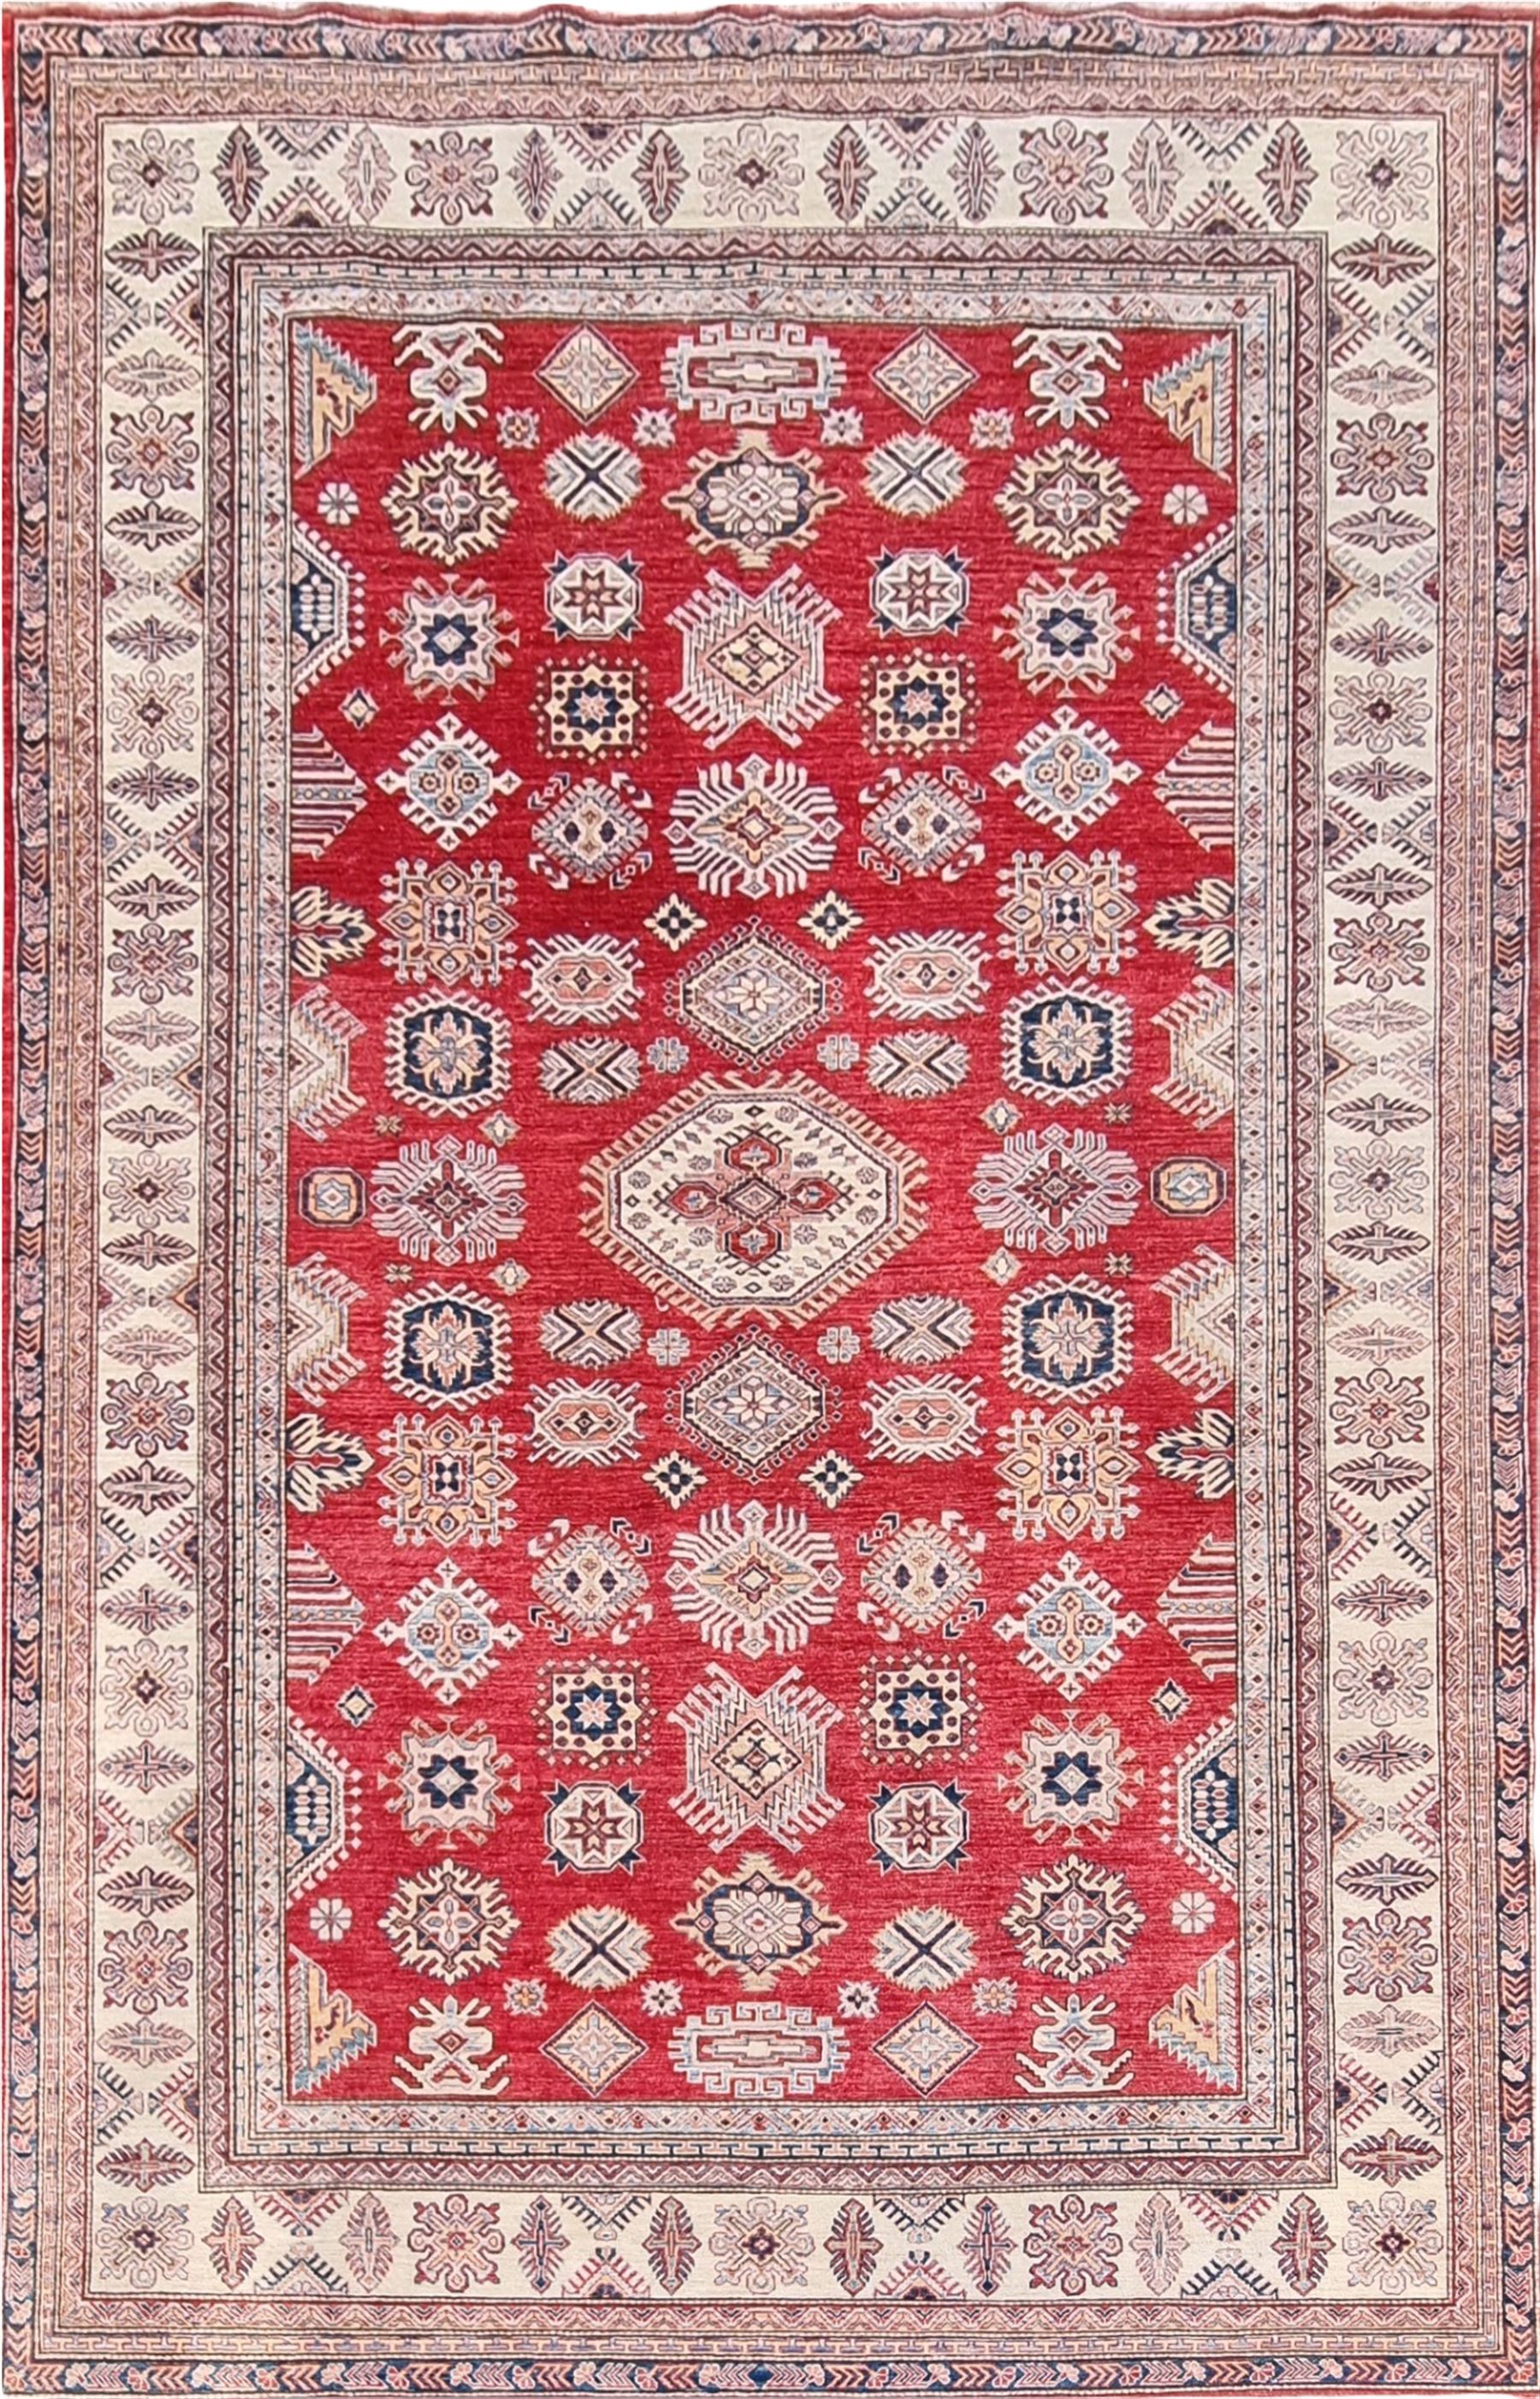 Large red ground carpet